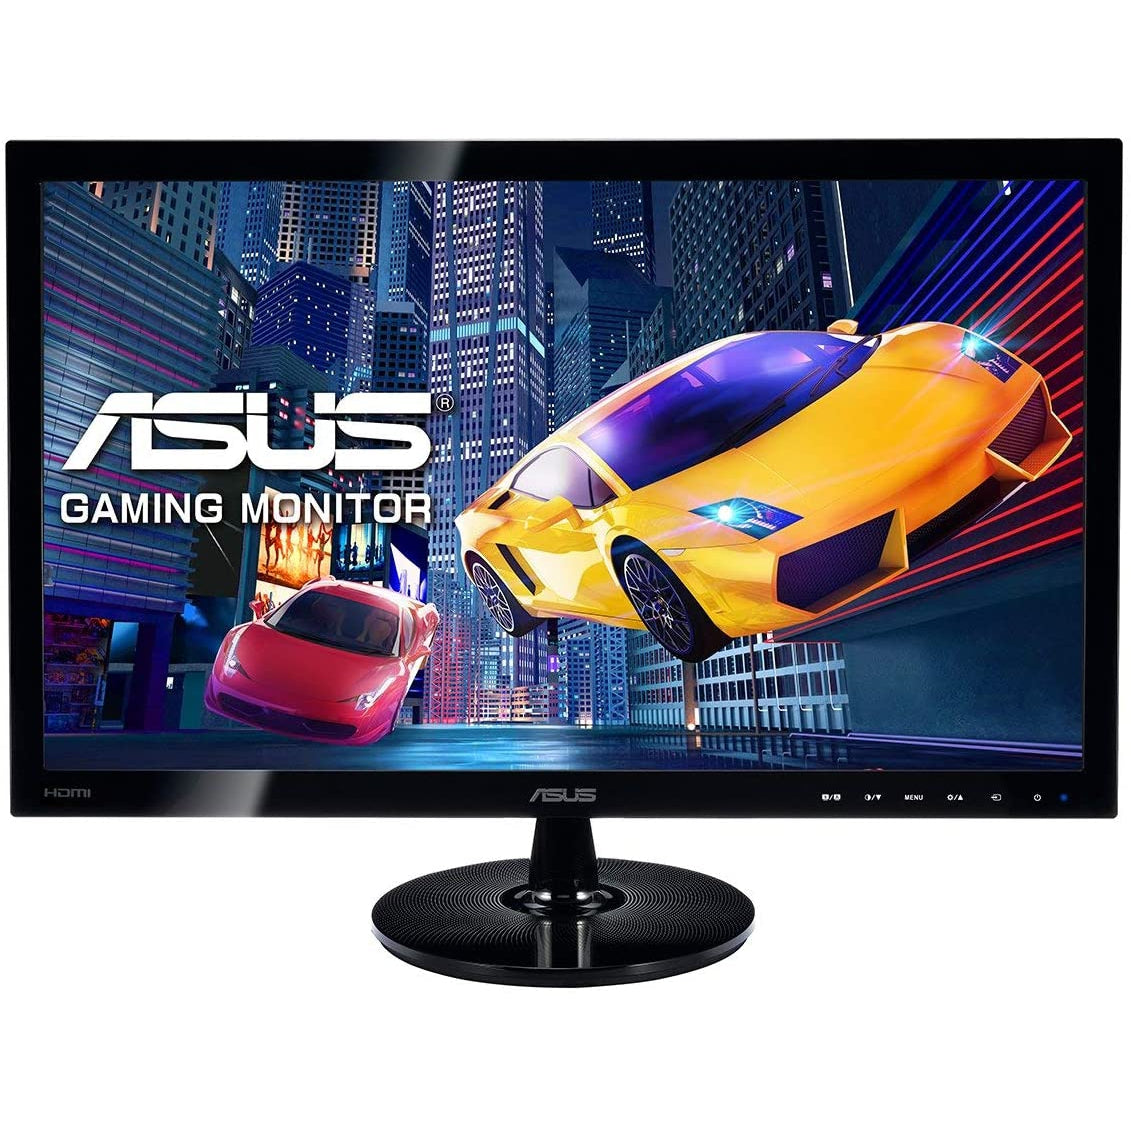 ASUS VS248HR 24 inch Gaming Monitor (1 ms, 1920 x 1080, HDMI, DVI-D, VGA, 250 cd/m2) - Black